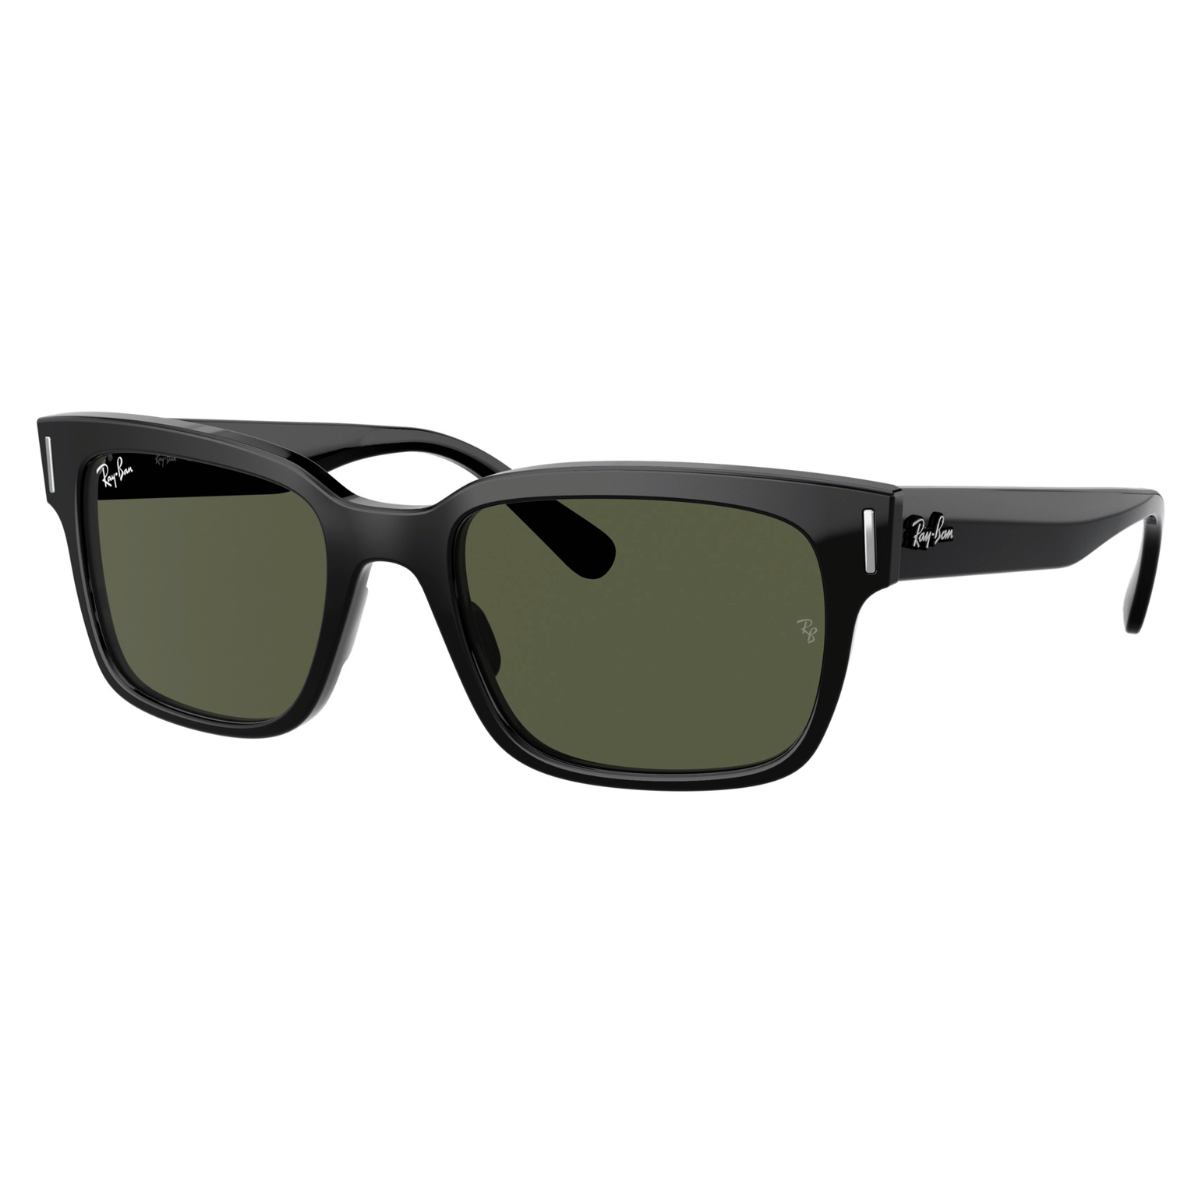 "Chic Ray-Ban 2190 Jeffrey Sunglasses in sleek black, featured among the finest men's eyewear at Optorium."